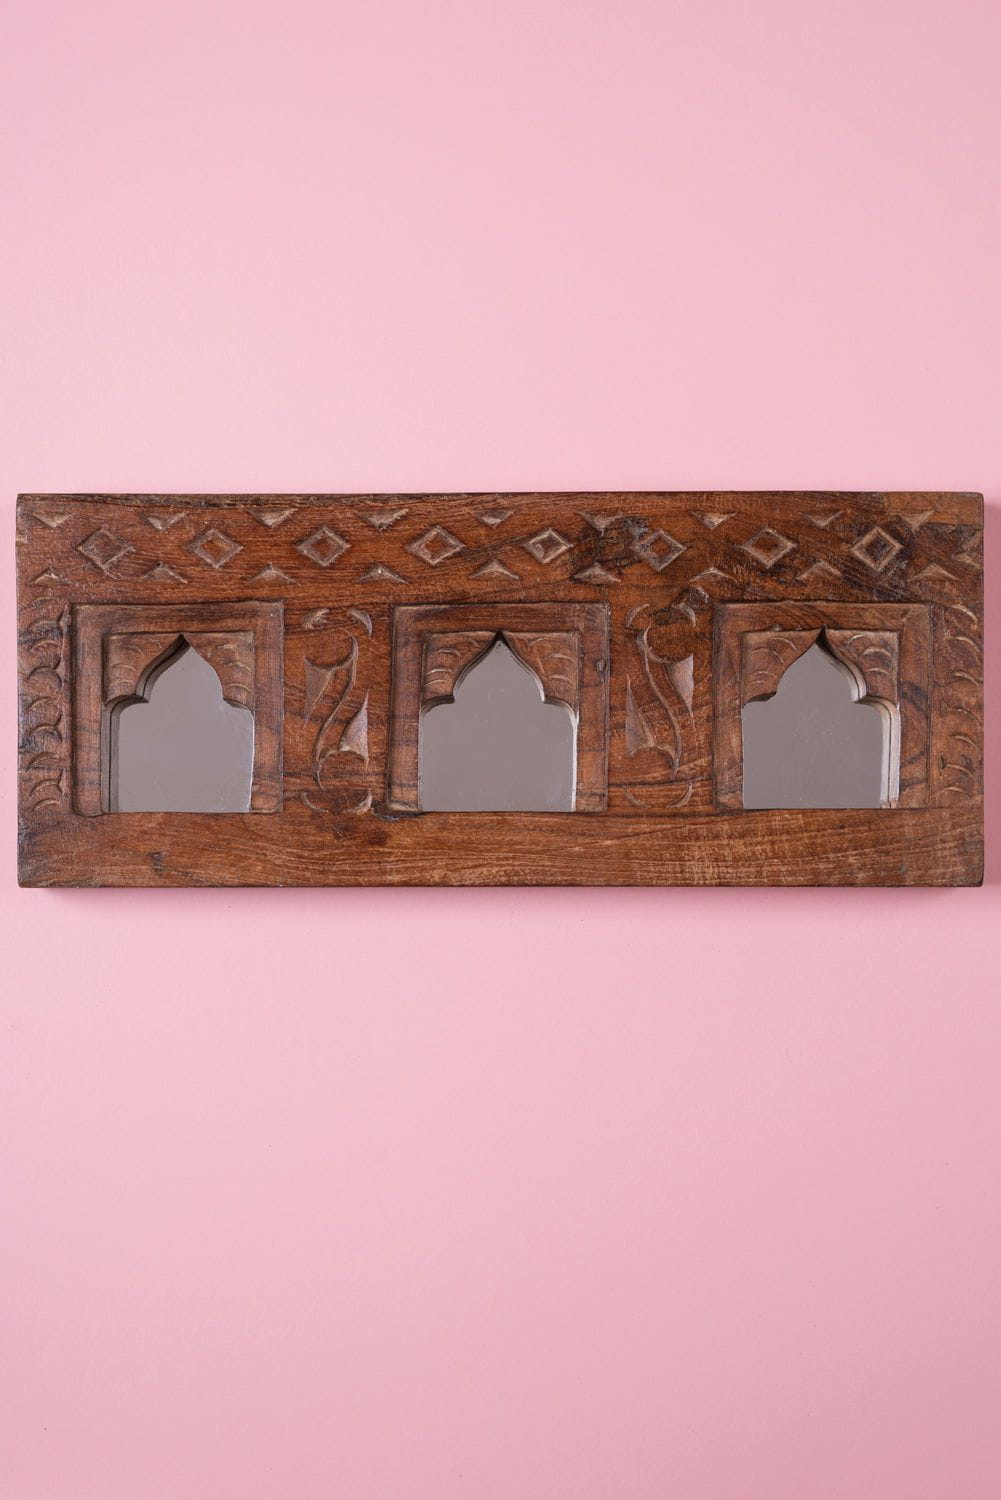 Ian Snow Ltd Vintage Wooden Triple Arch Frame - 03